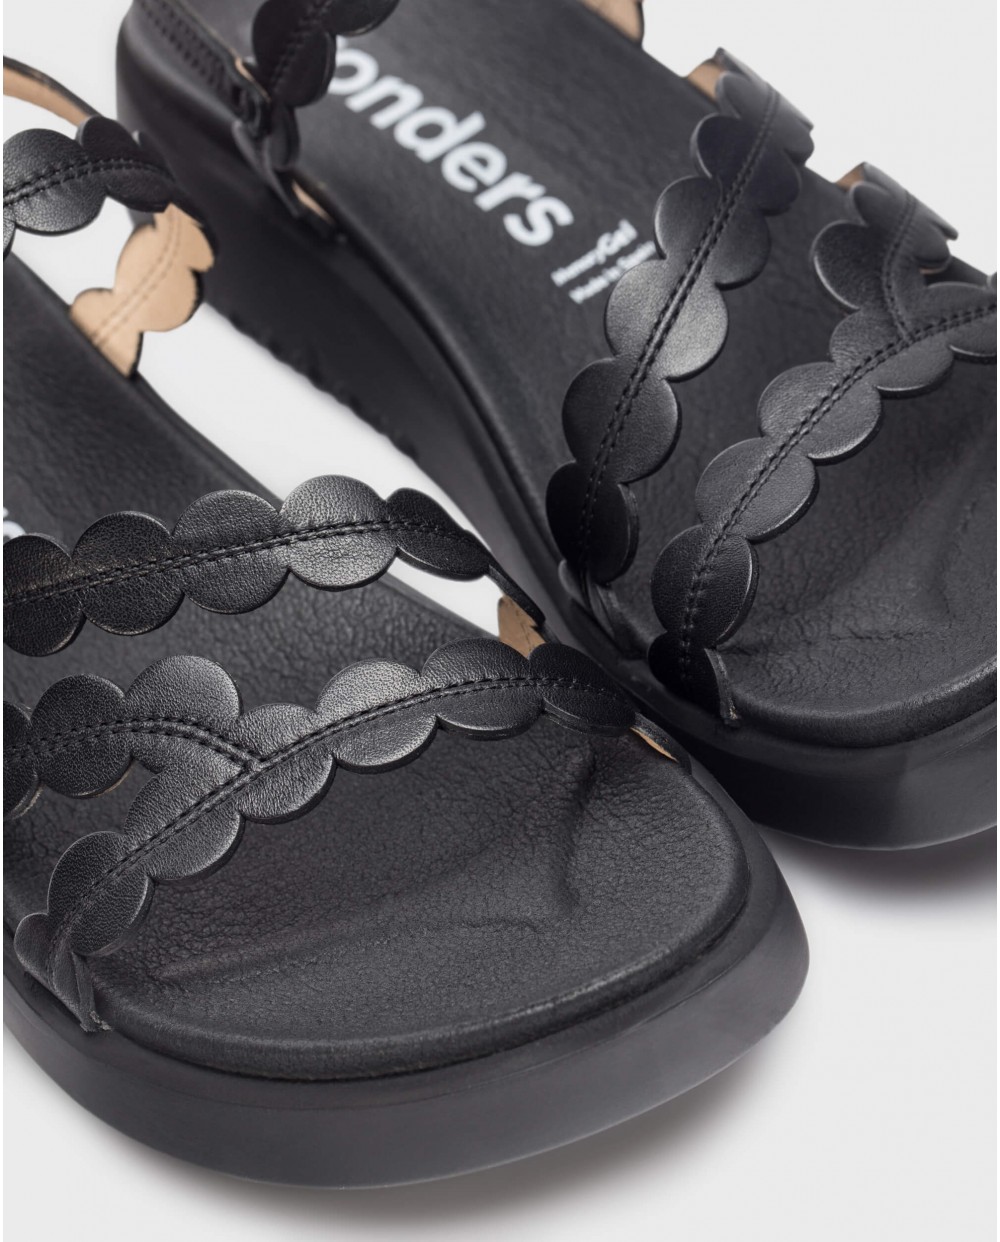 Wonders-Sandals-Black Motril sandals